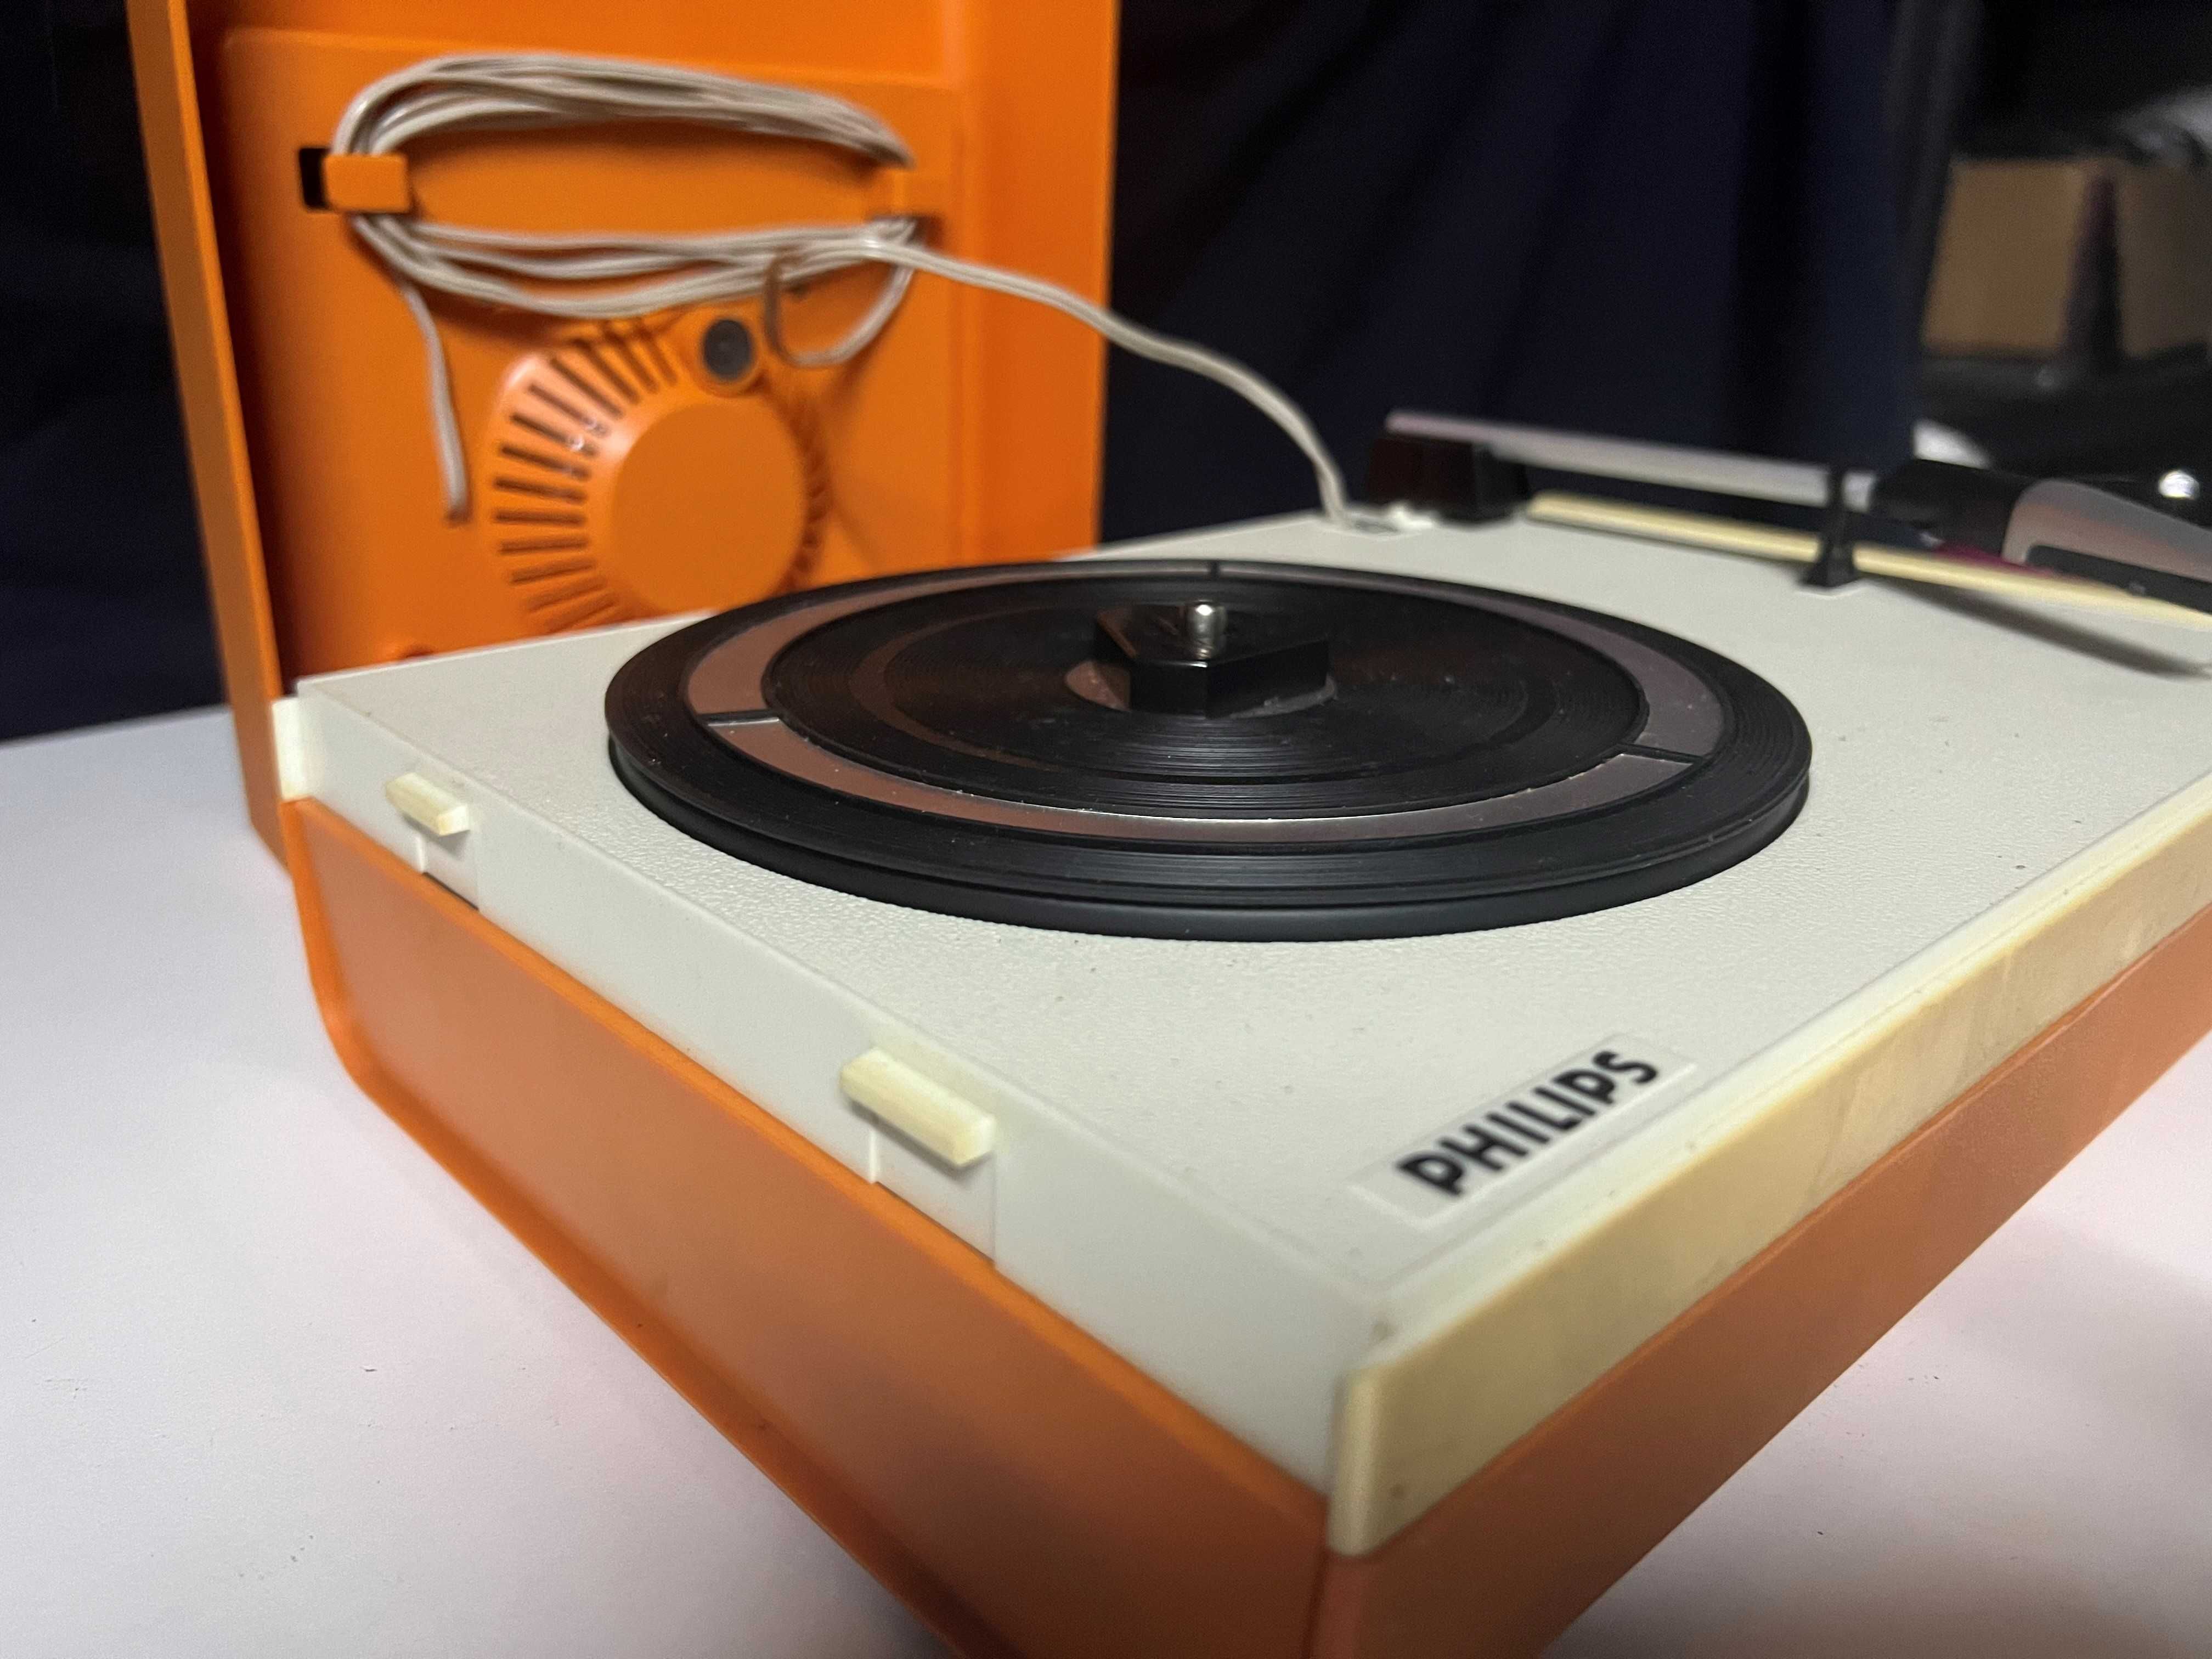 Vintage Gira Discos Portatil Philips 111 ORANGE